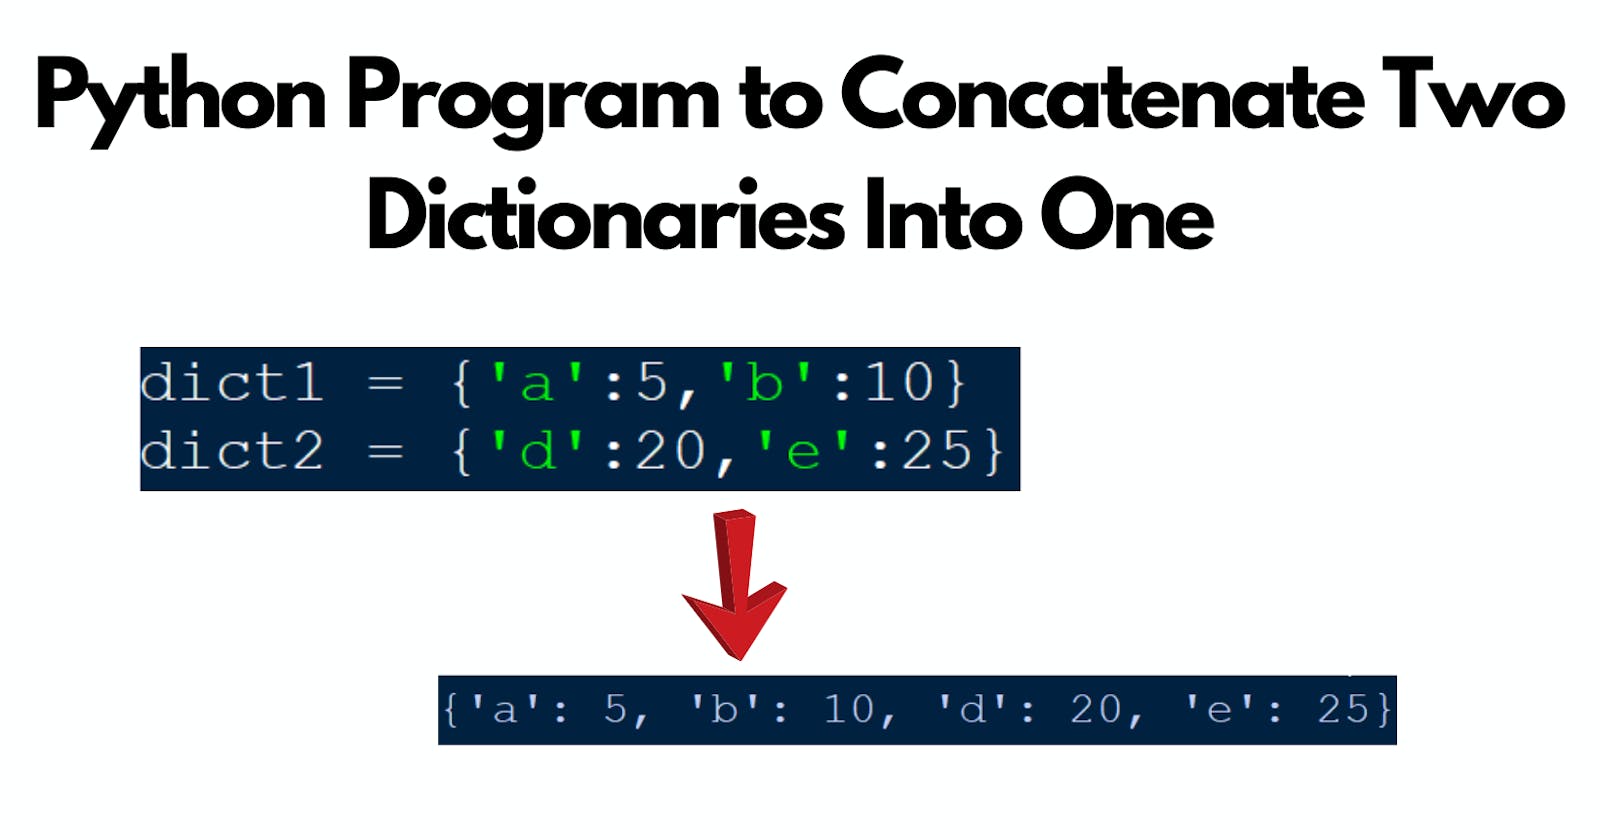 Python Program to Concatenate Two Dictionaries Into One